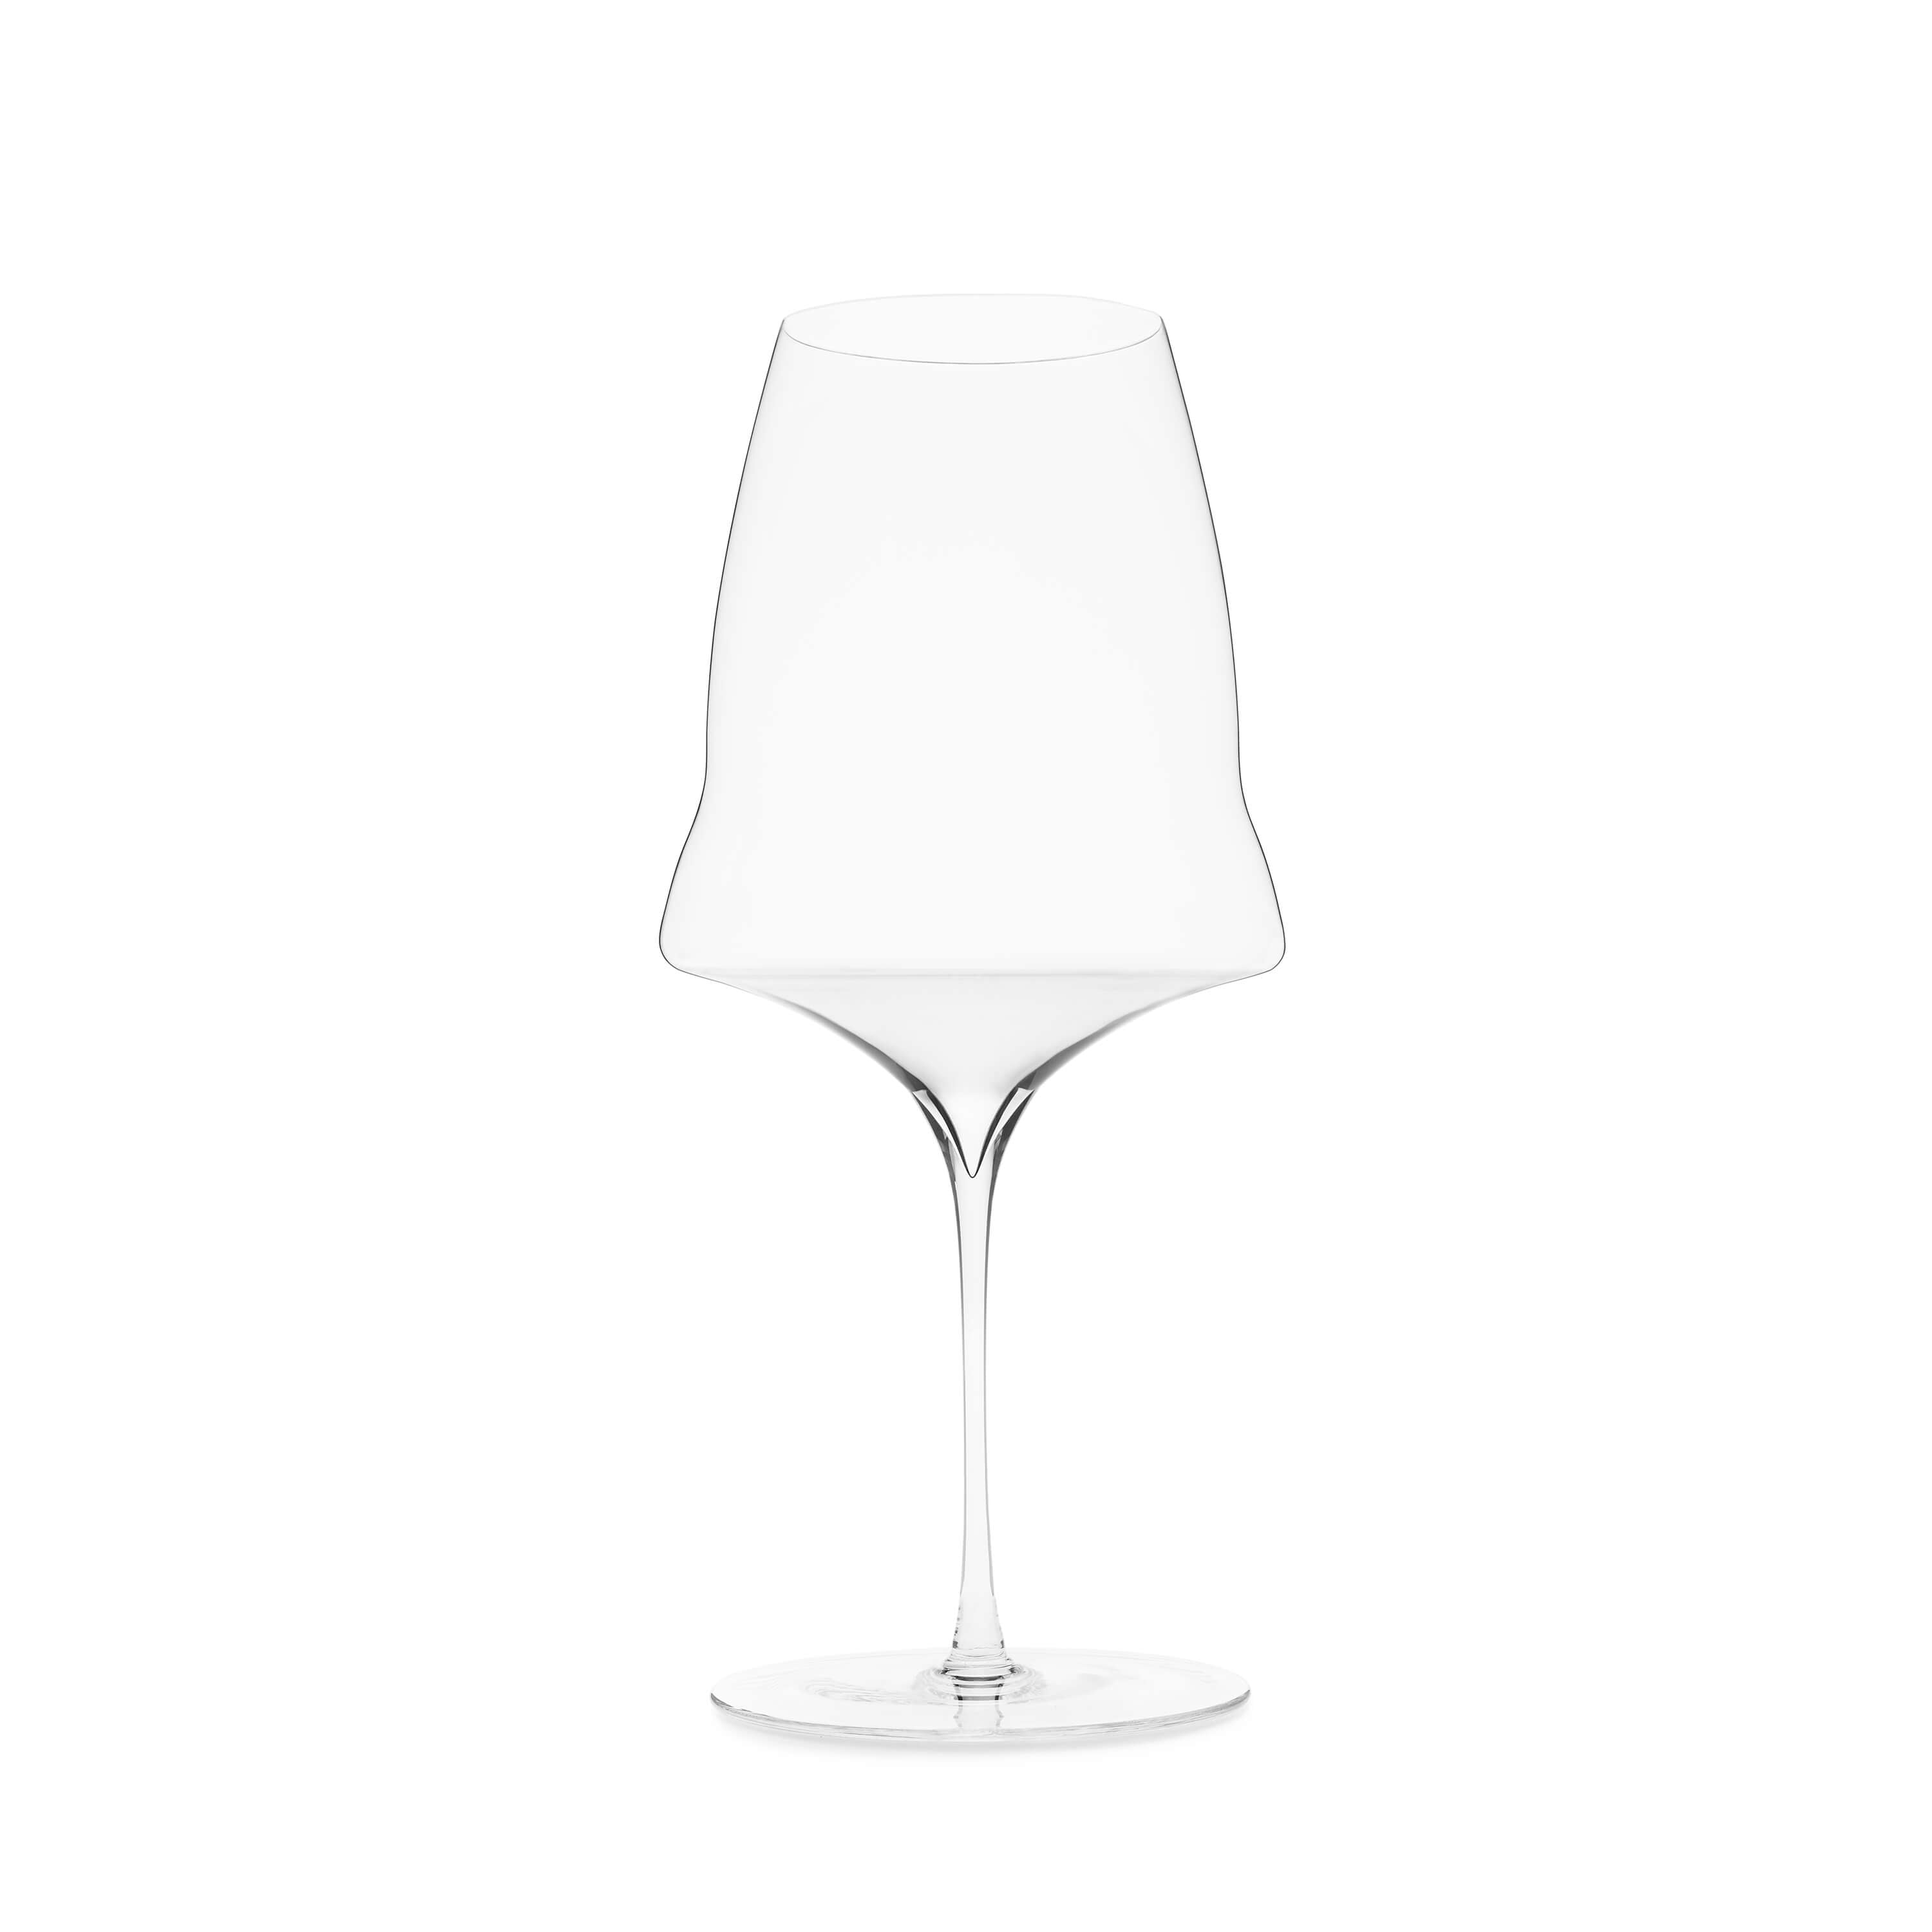 JOSEPHINE No 3 by Josephinenhütte – Red wine glass #Set_Single Glass